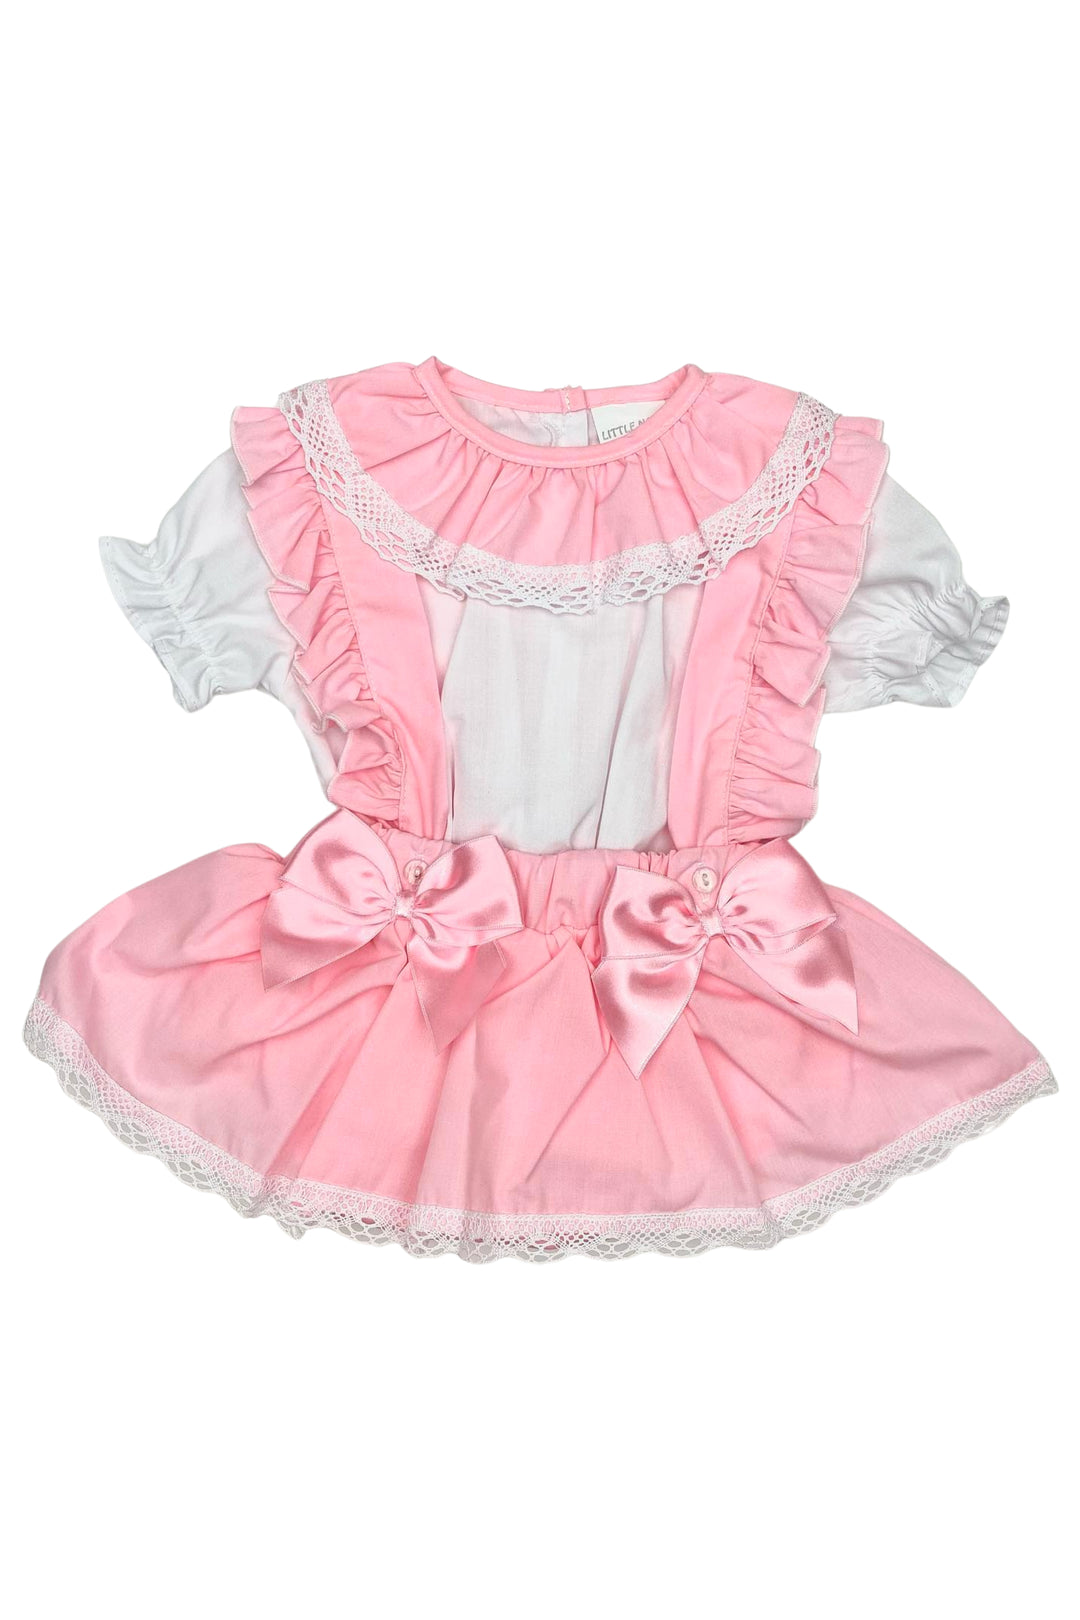 Little Nosh "Athena" Blouse & Neon Pink Bloomer Skirt | Millie and John